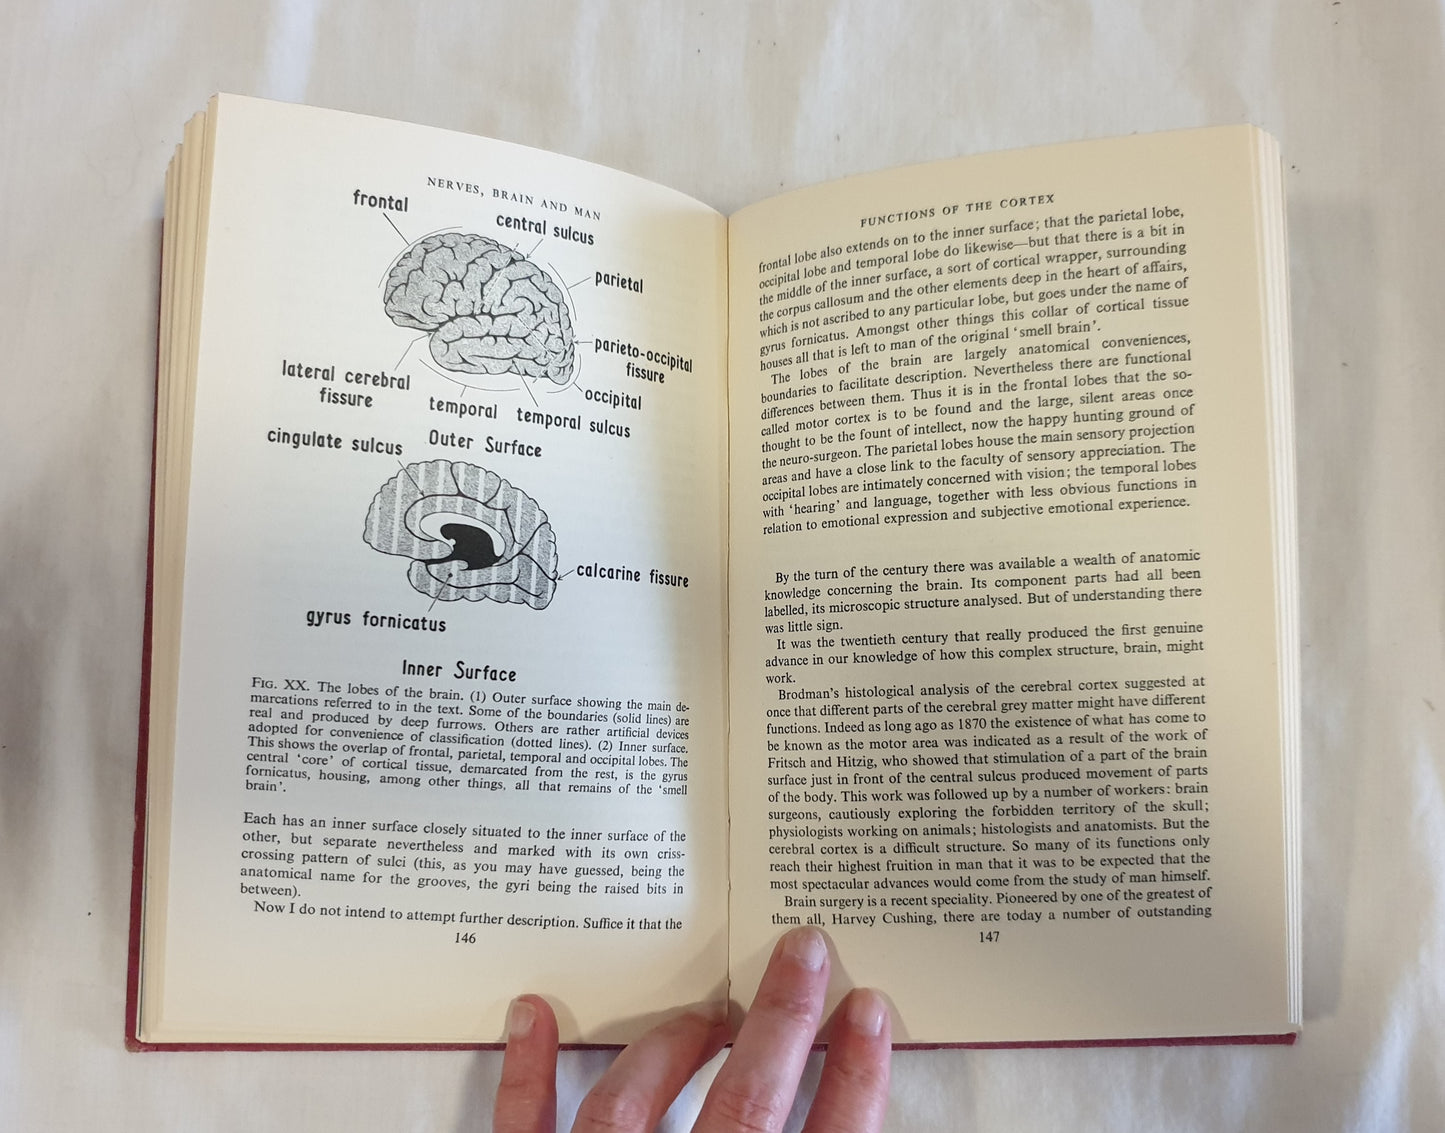 Nerves, Brain and Man by John Grayson